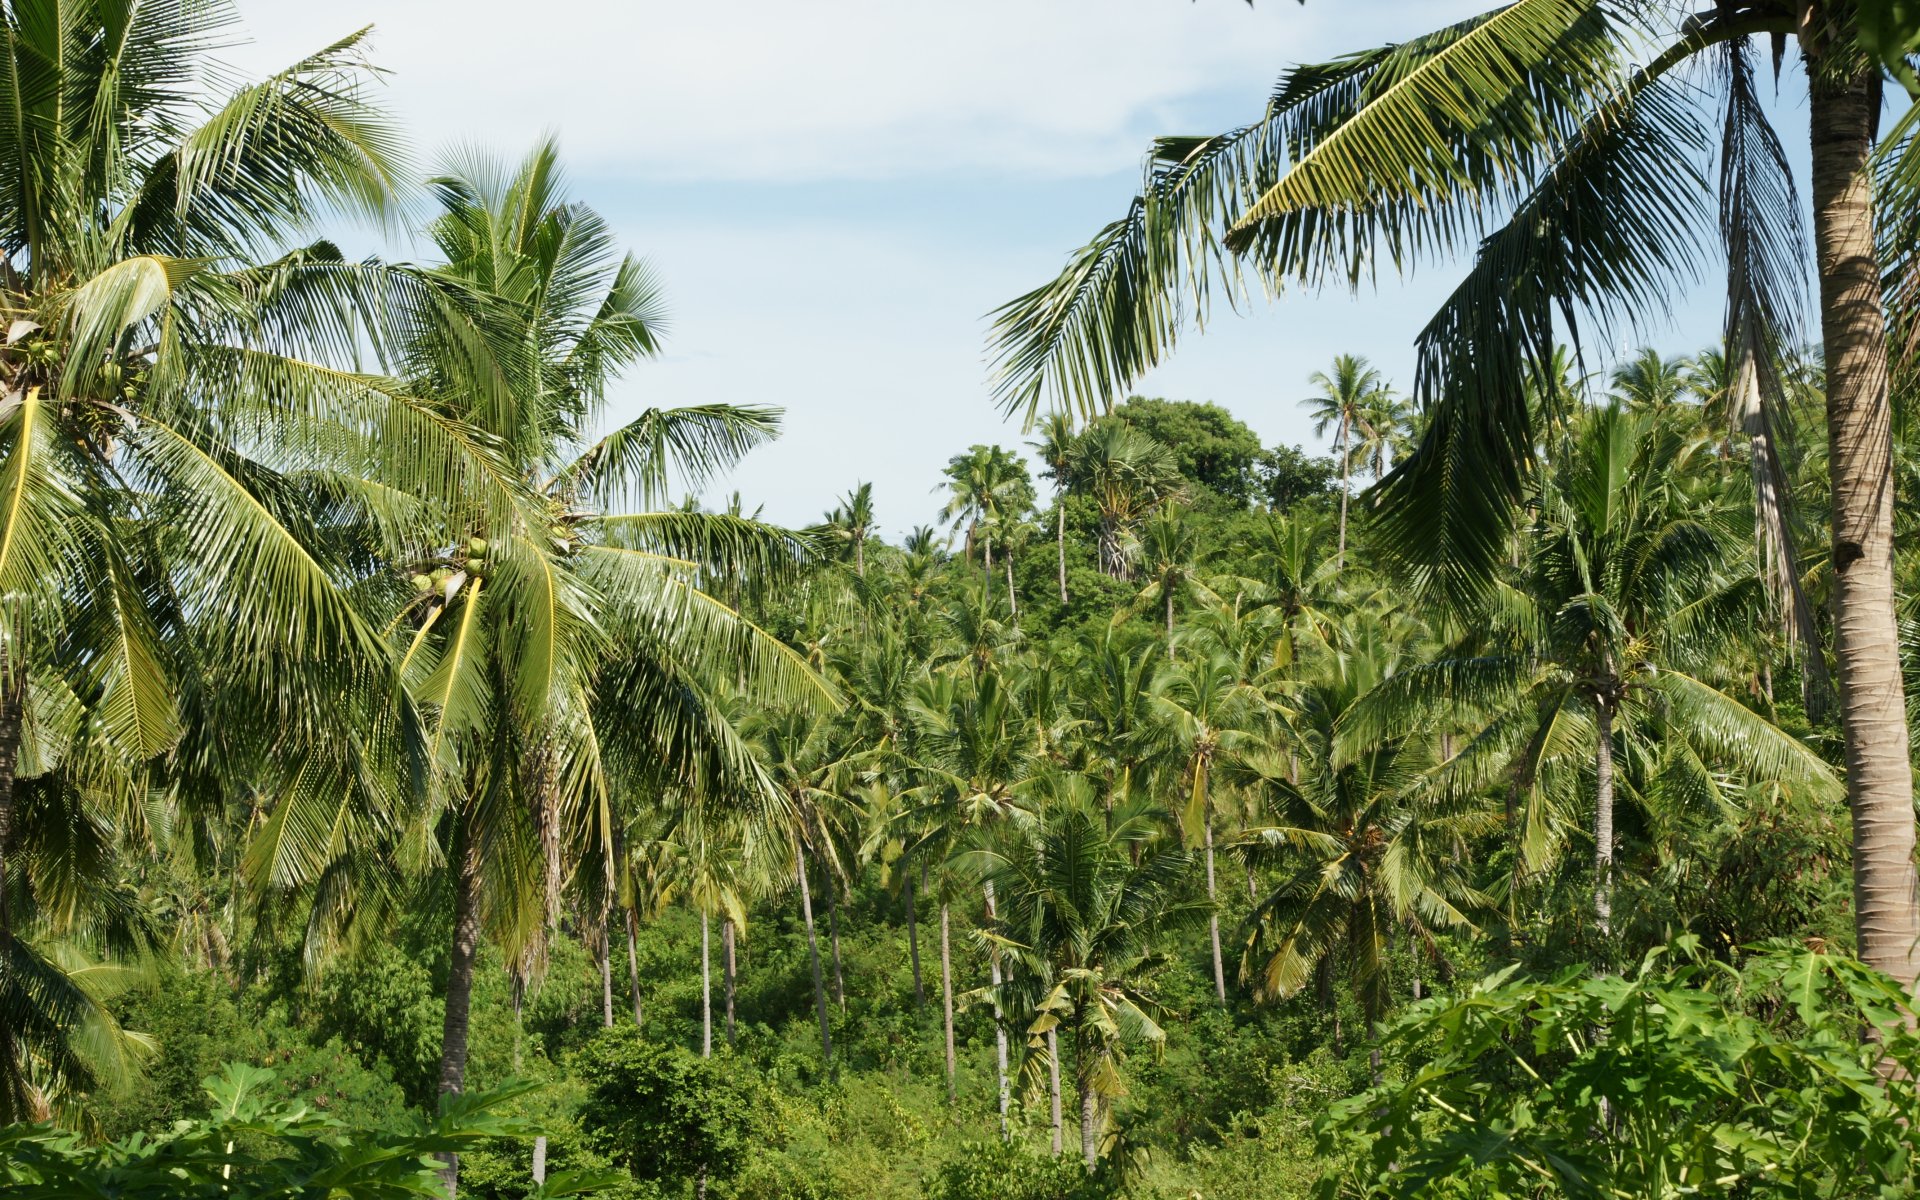 Palm trees   coconut palms